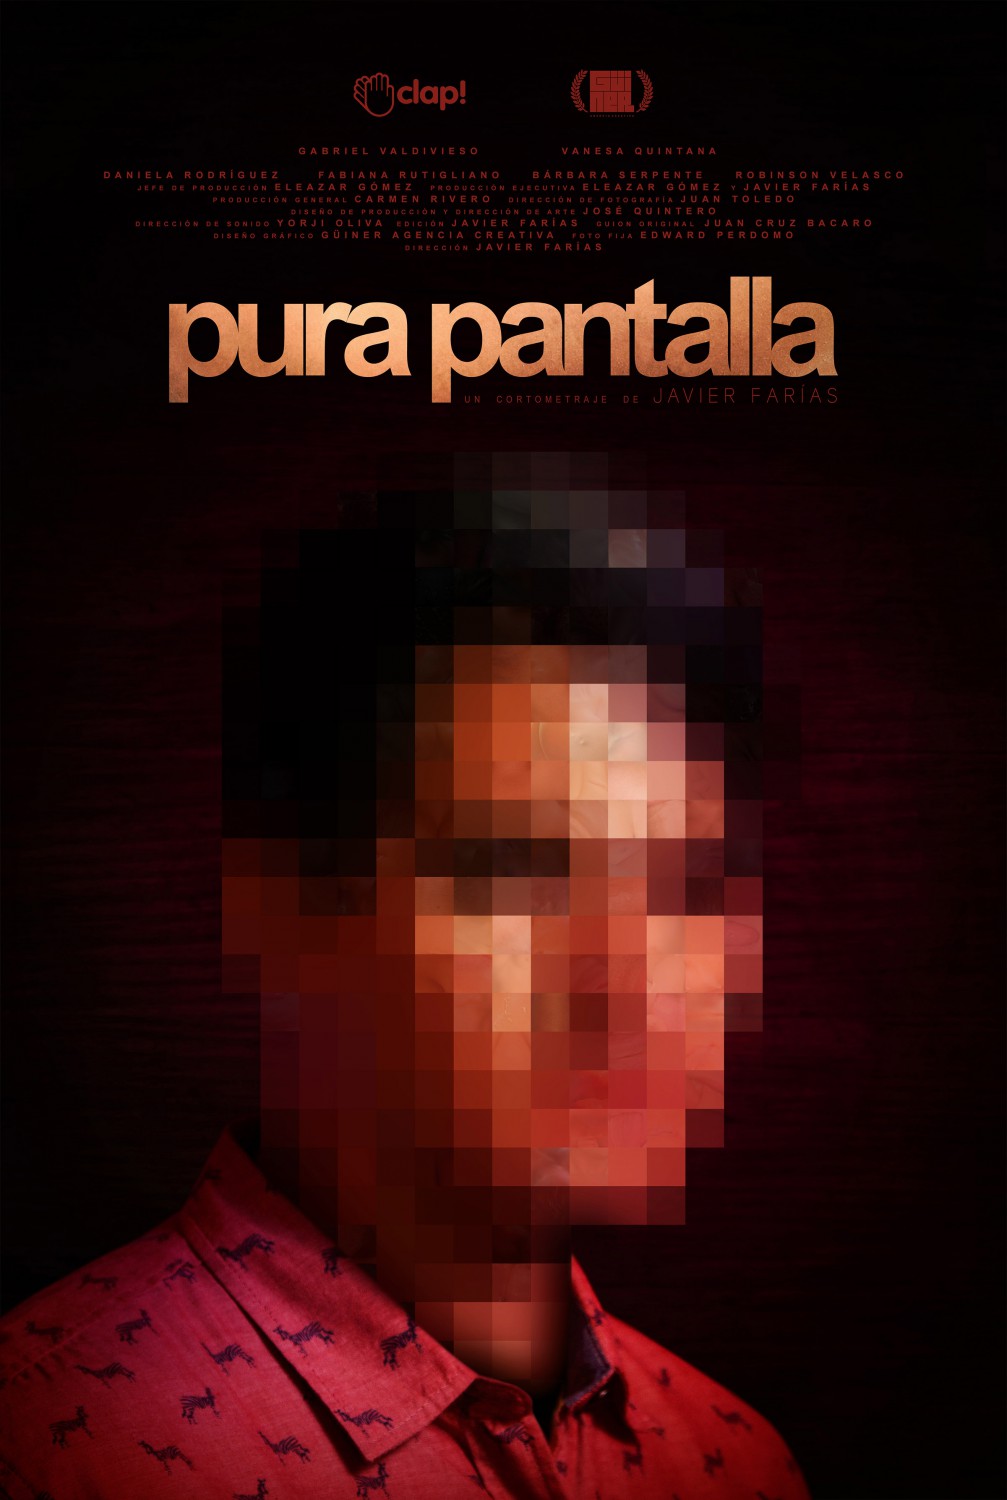 Extra Large Movie Poster Image for Pura Pantalla